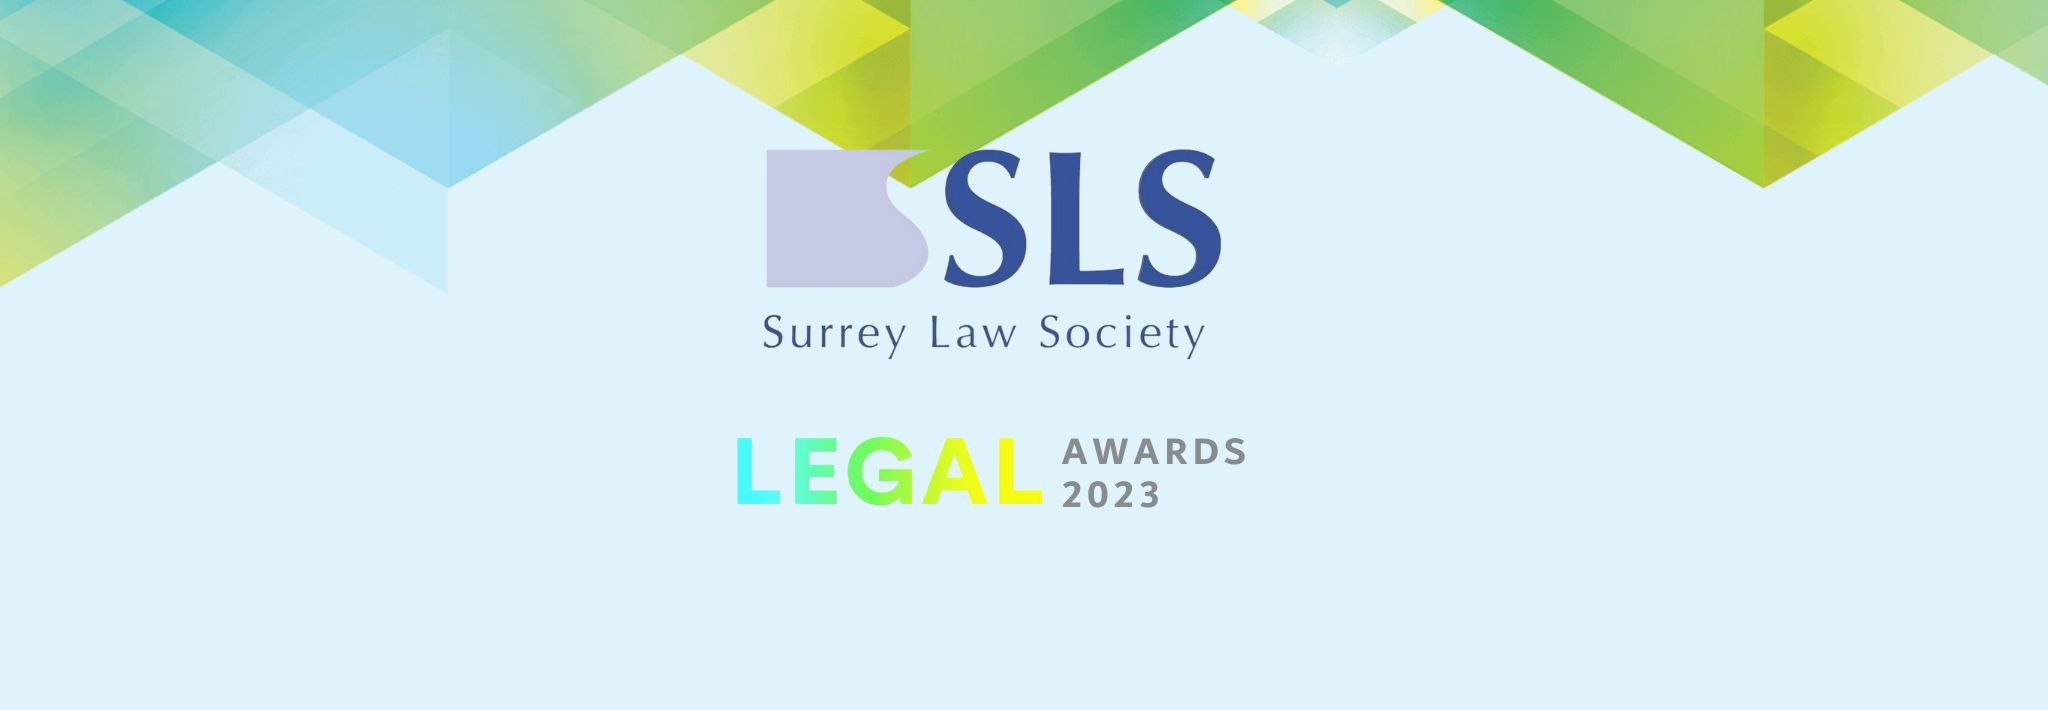 GBH Law- SLS Legal Awards 2023 shortlisted blog